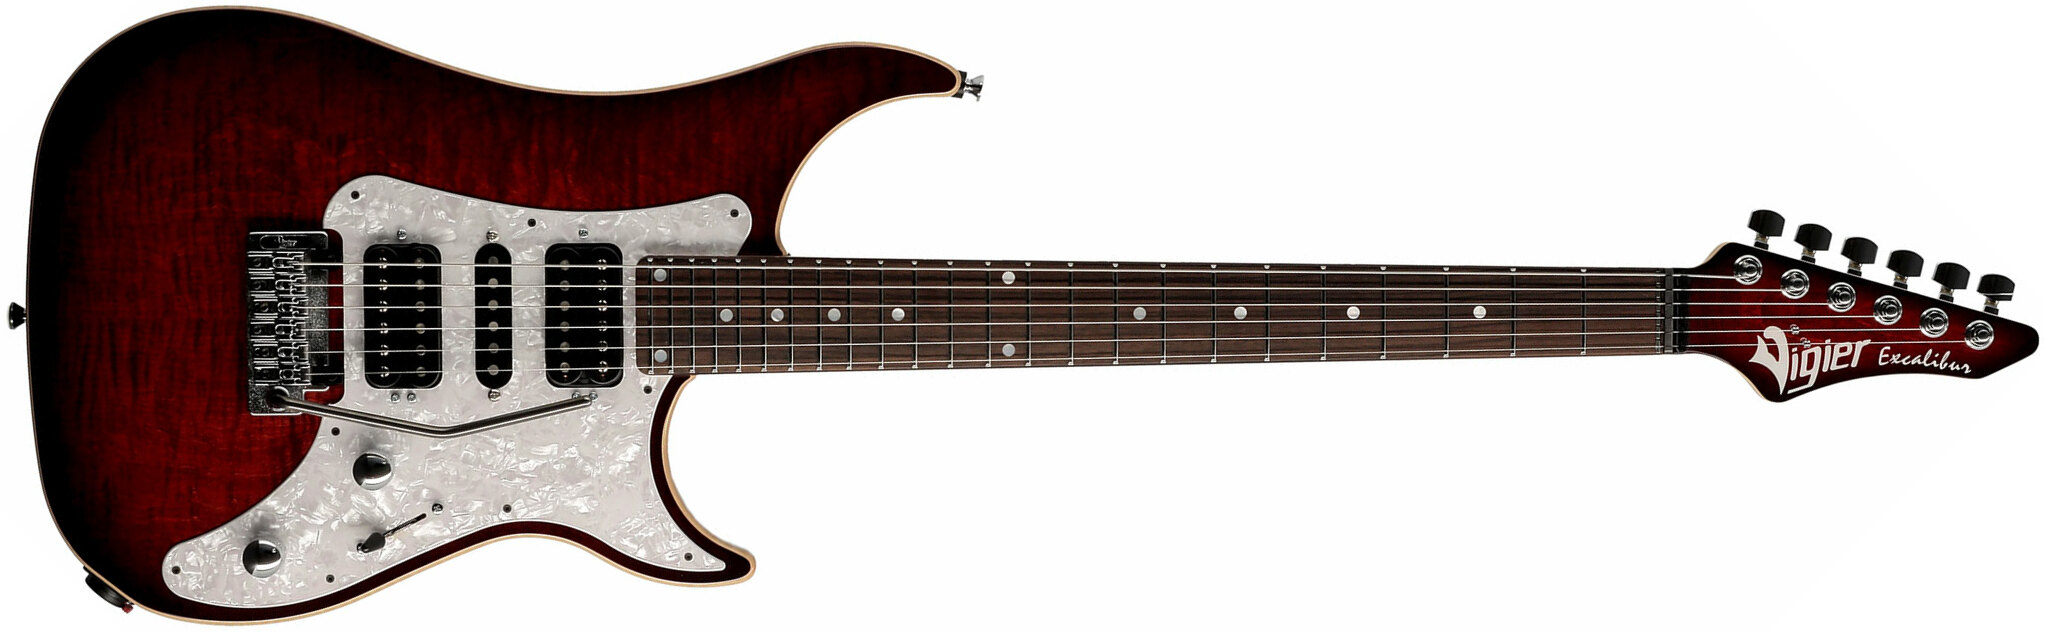 Vigier Excalibur Speciaal Hsh Trem Rw - Mysterious Red - Guitarra electrica metalica - Main picture